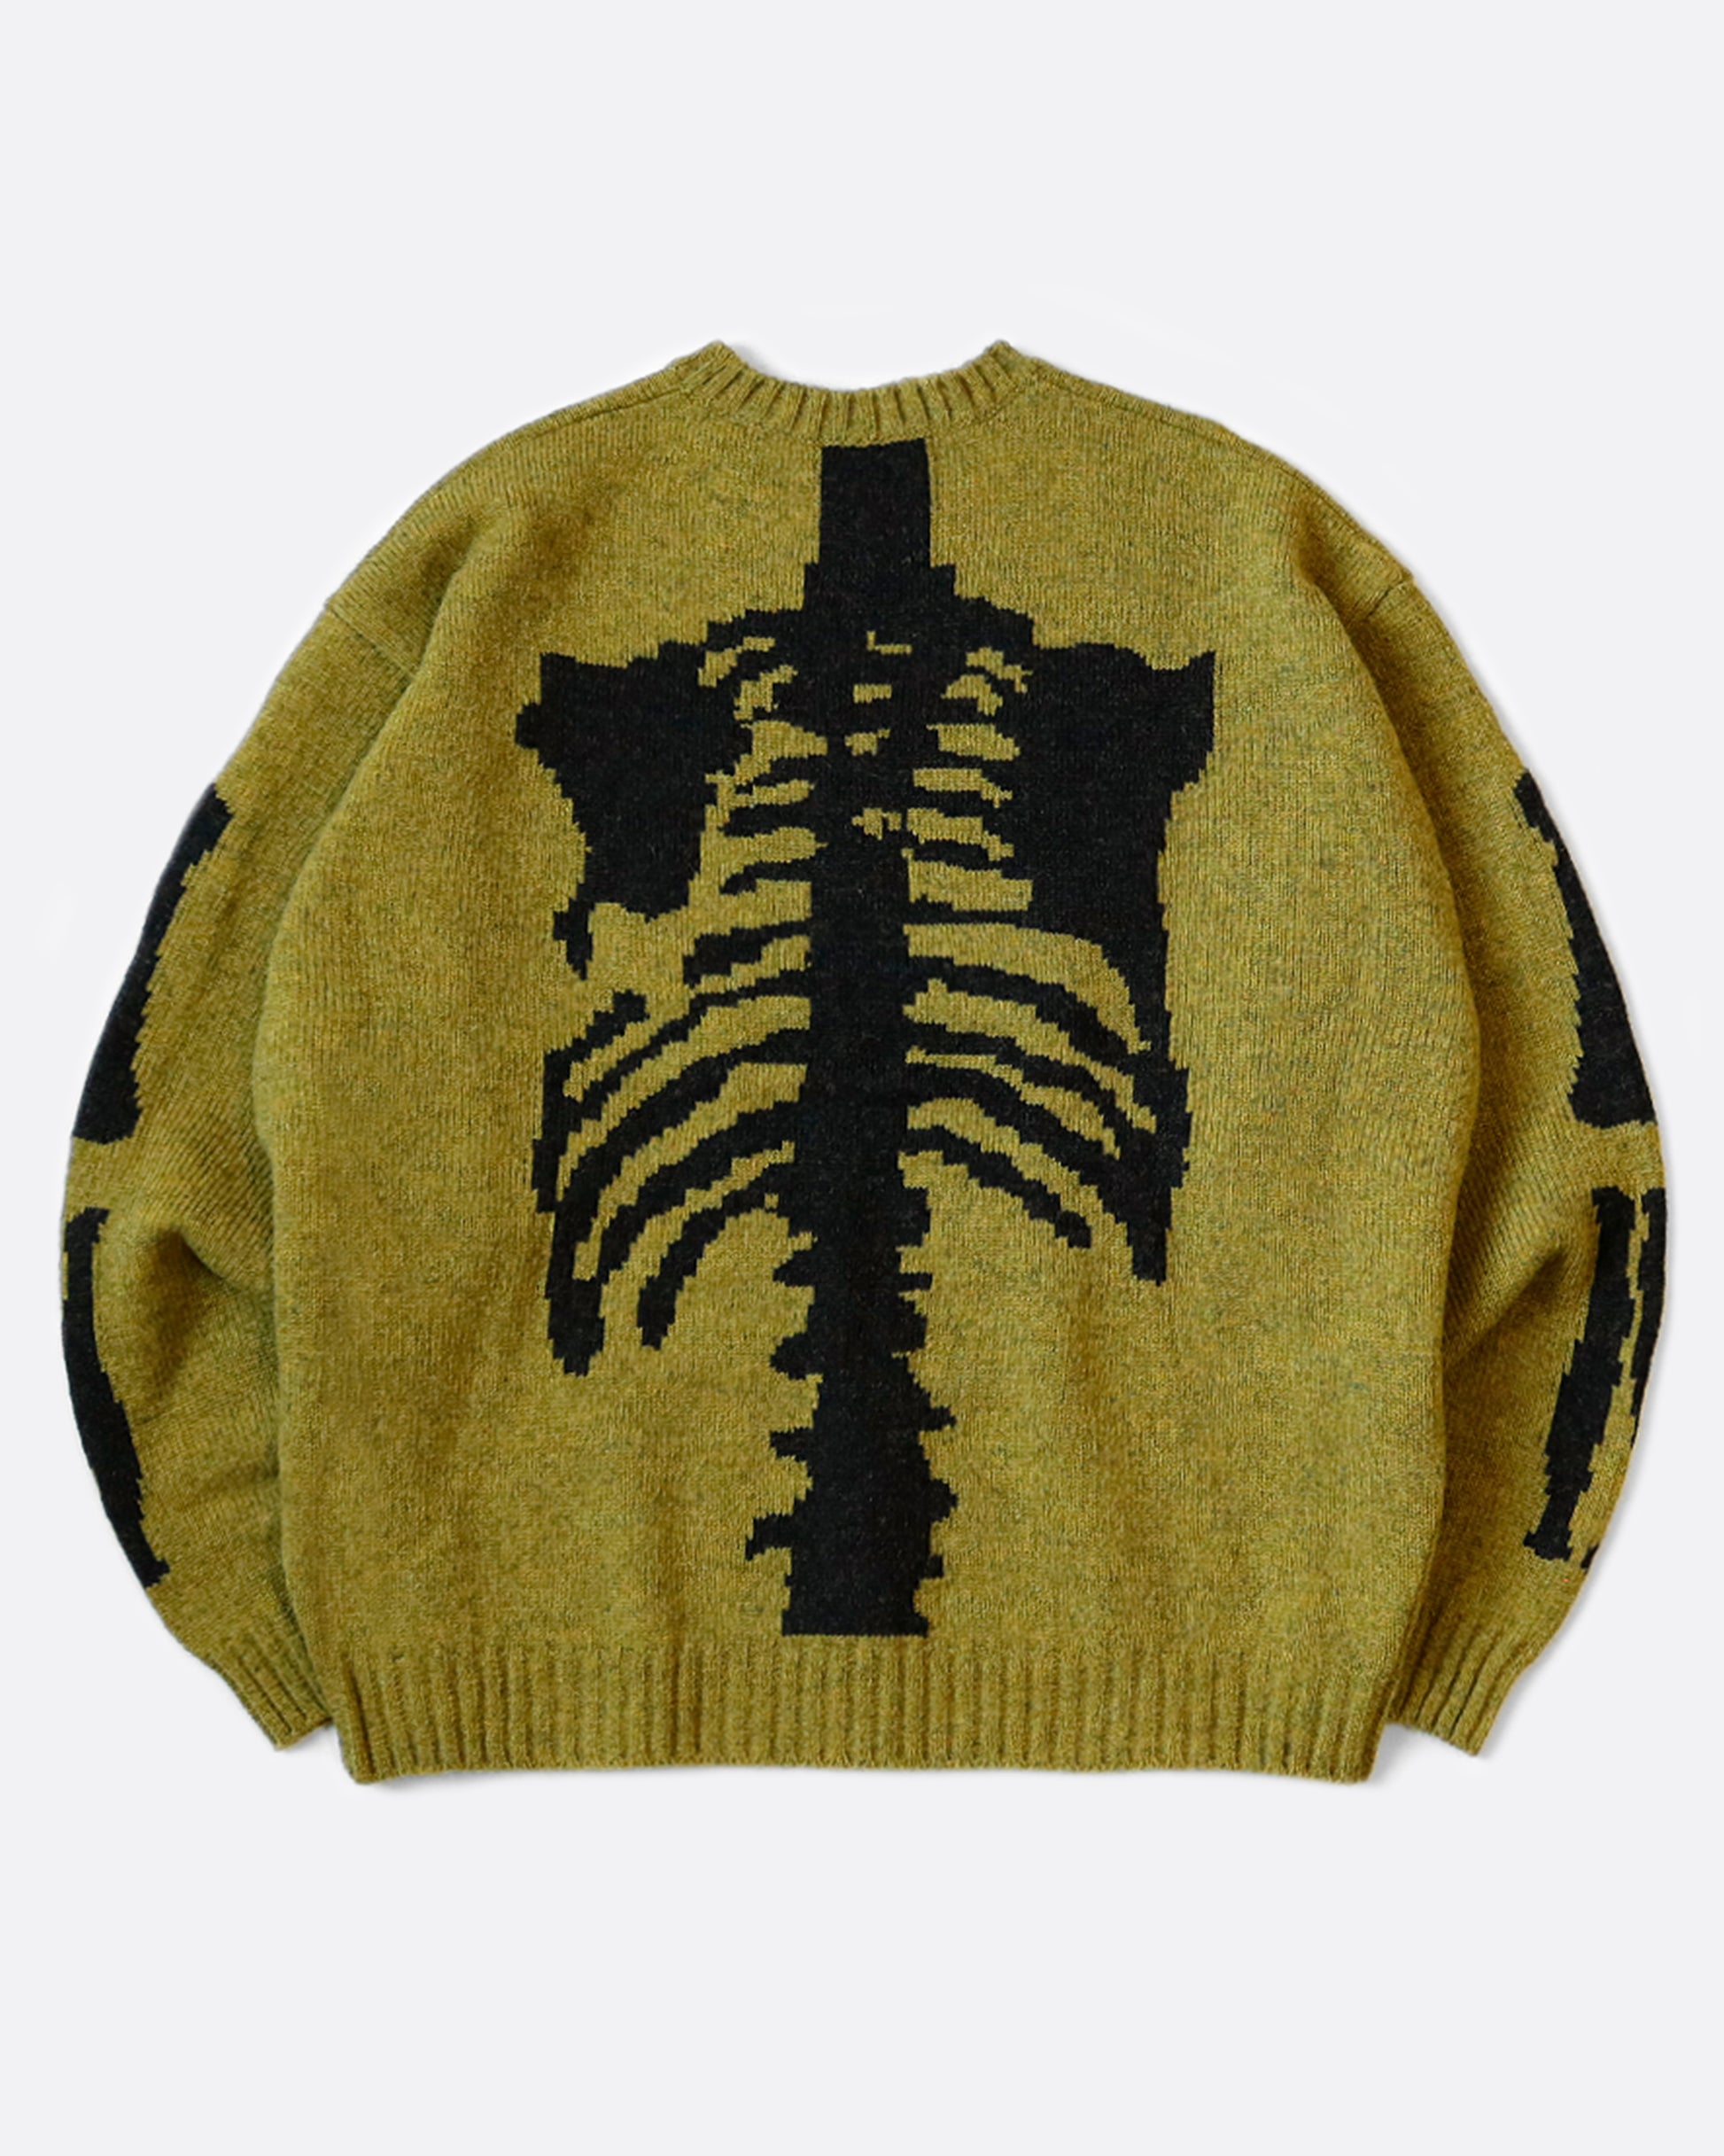 A 5g knit crewneck sweater with Kapital's signature skeletal design.